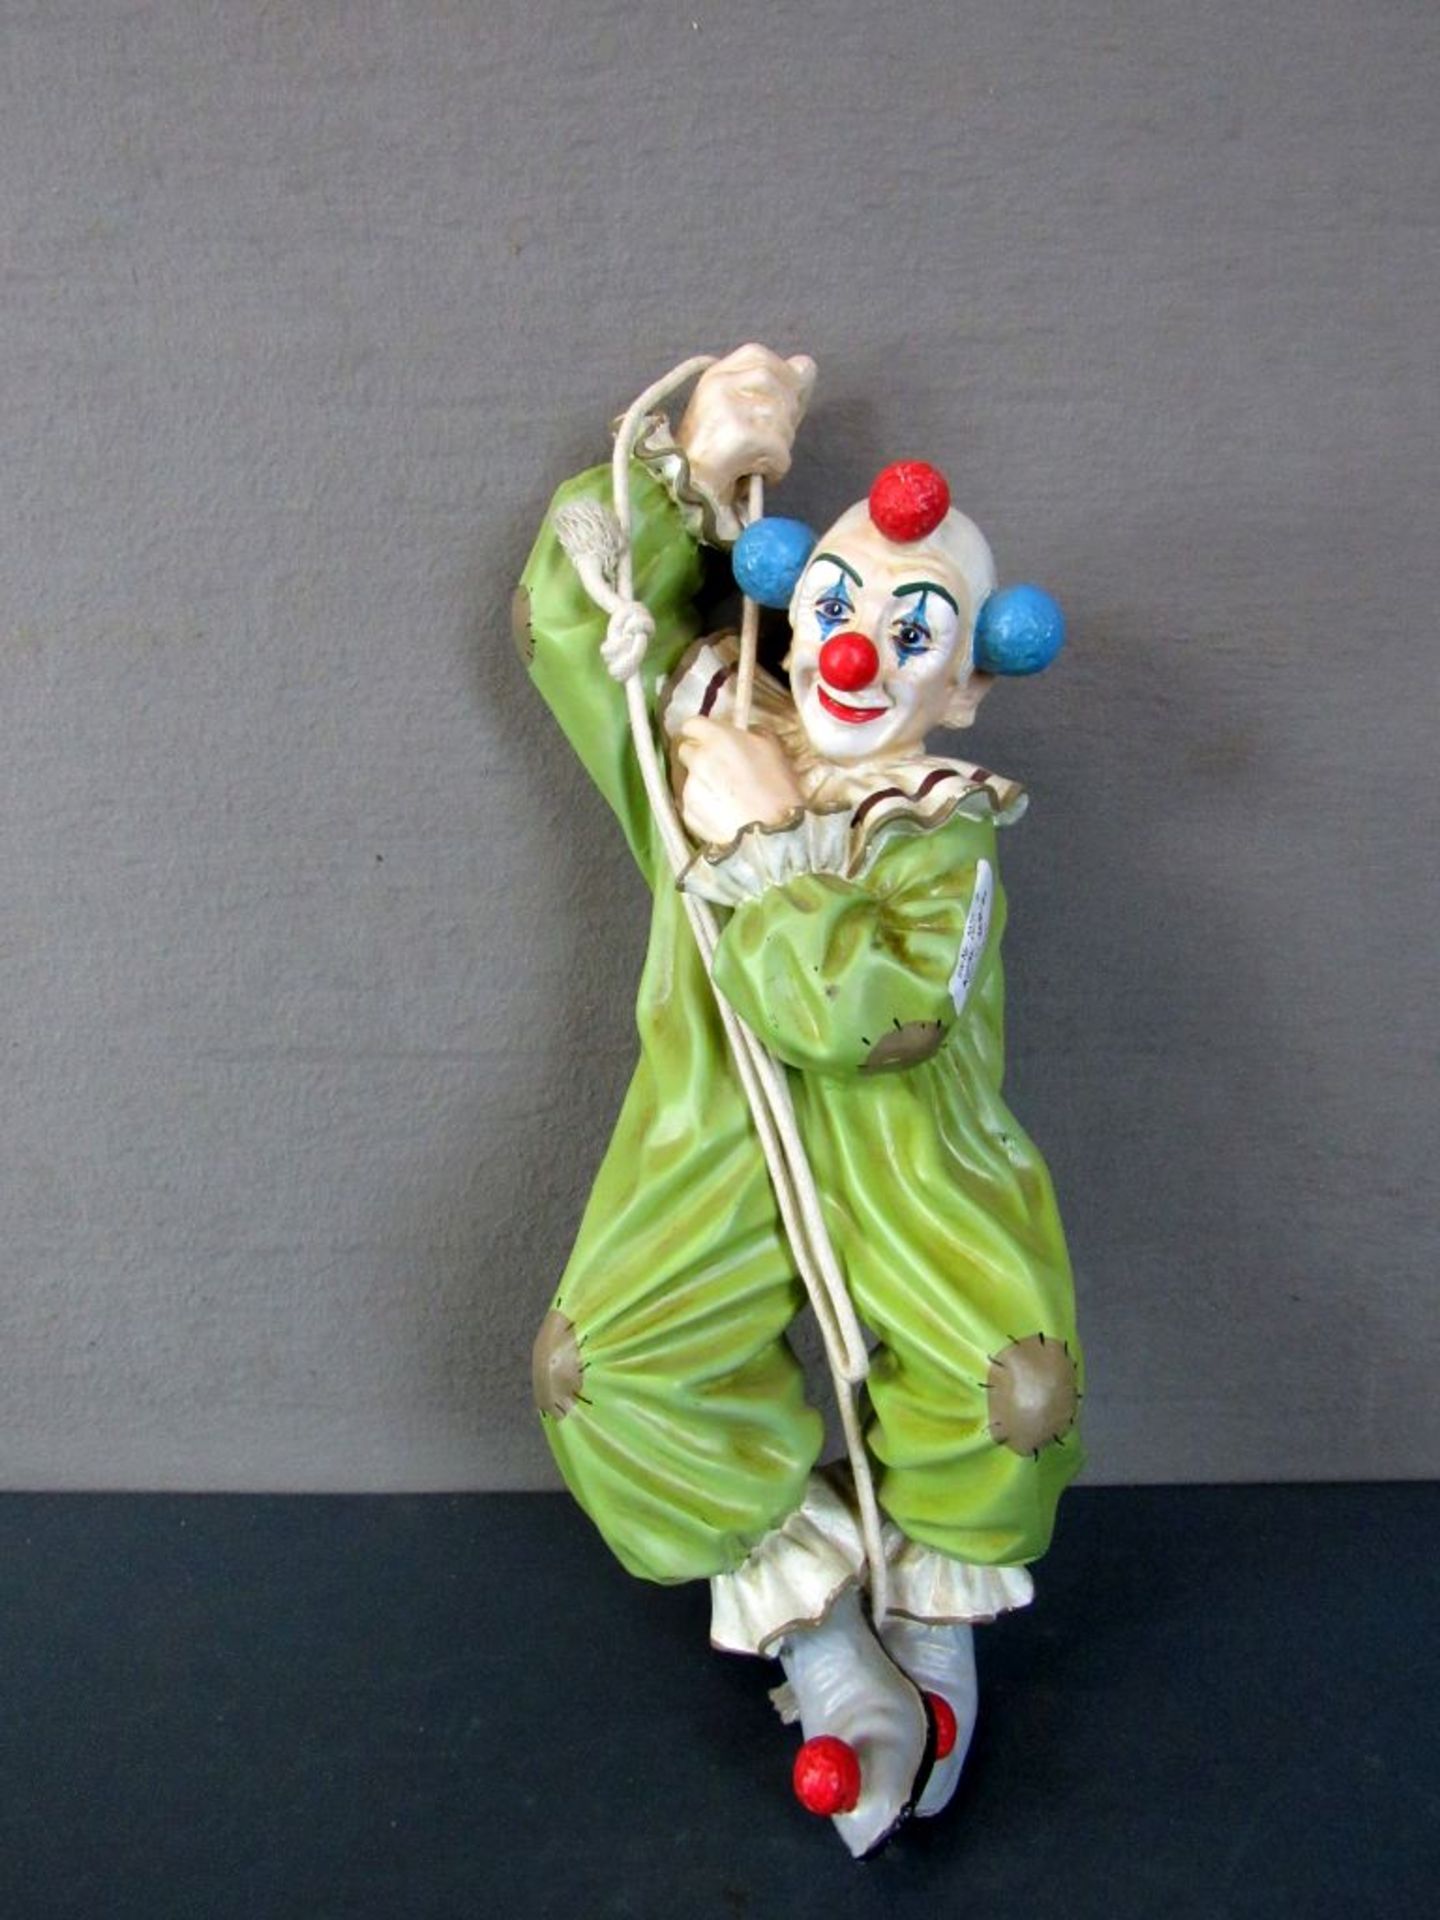 Clownfigur kletternd am Seil